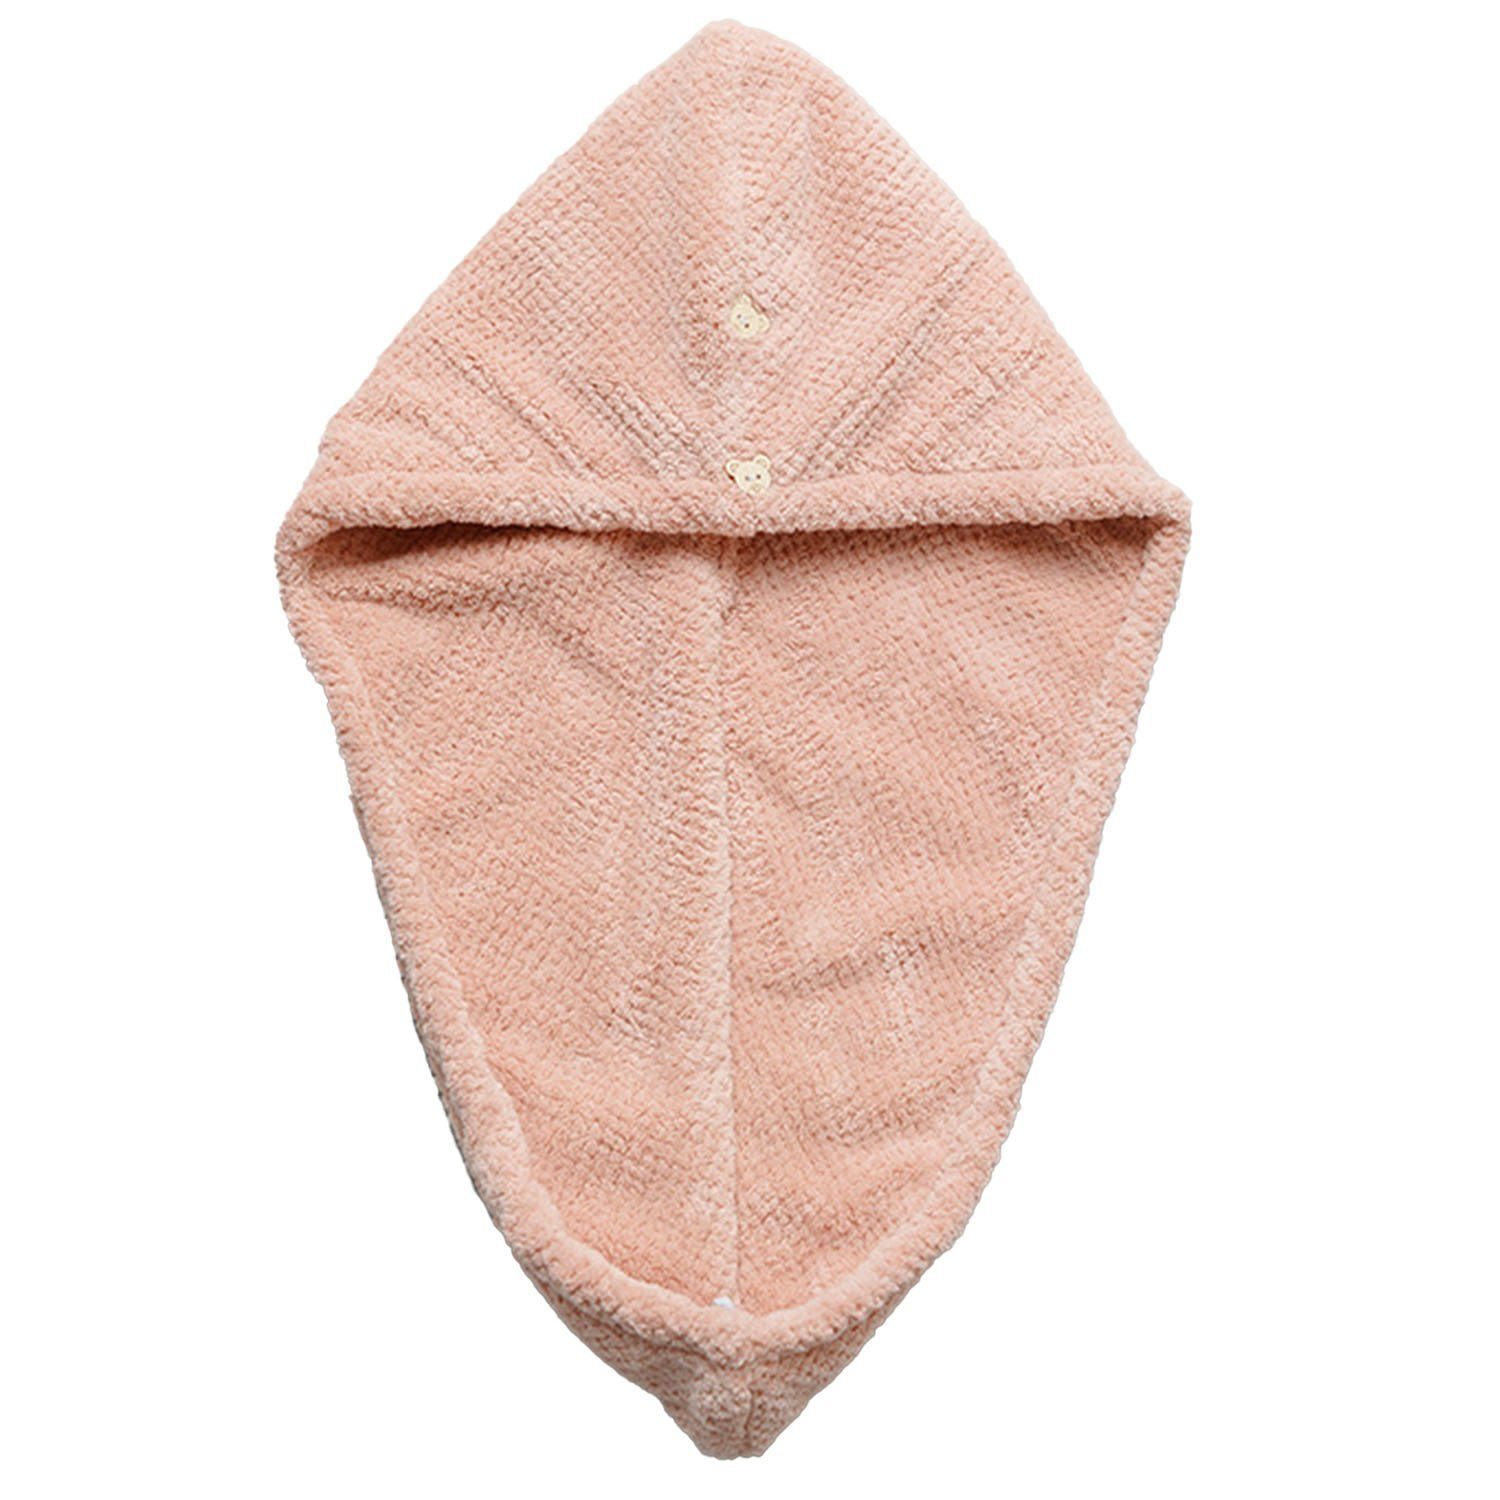 MAGICSHE Turban-Handtuch 2 Stück Mikrofaser Handtuch Haare, weiche Korallenvlies Haarturban Rosa